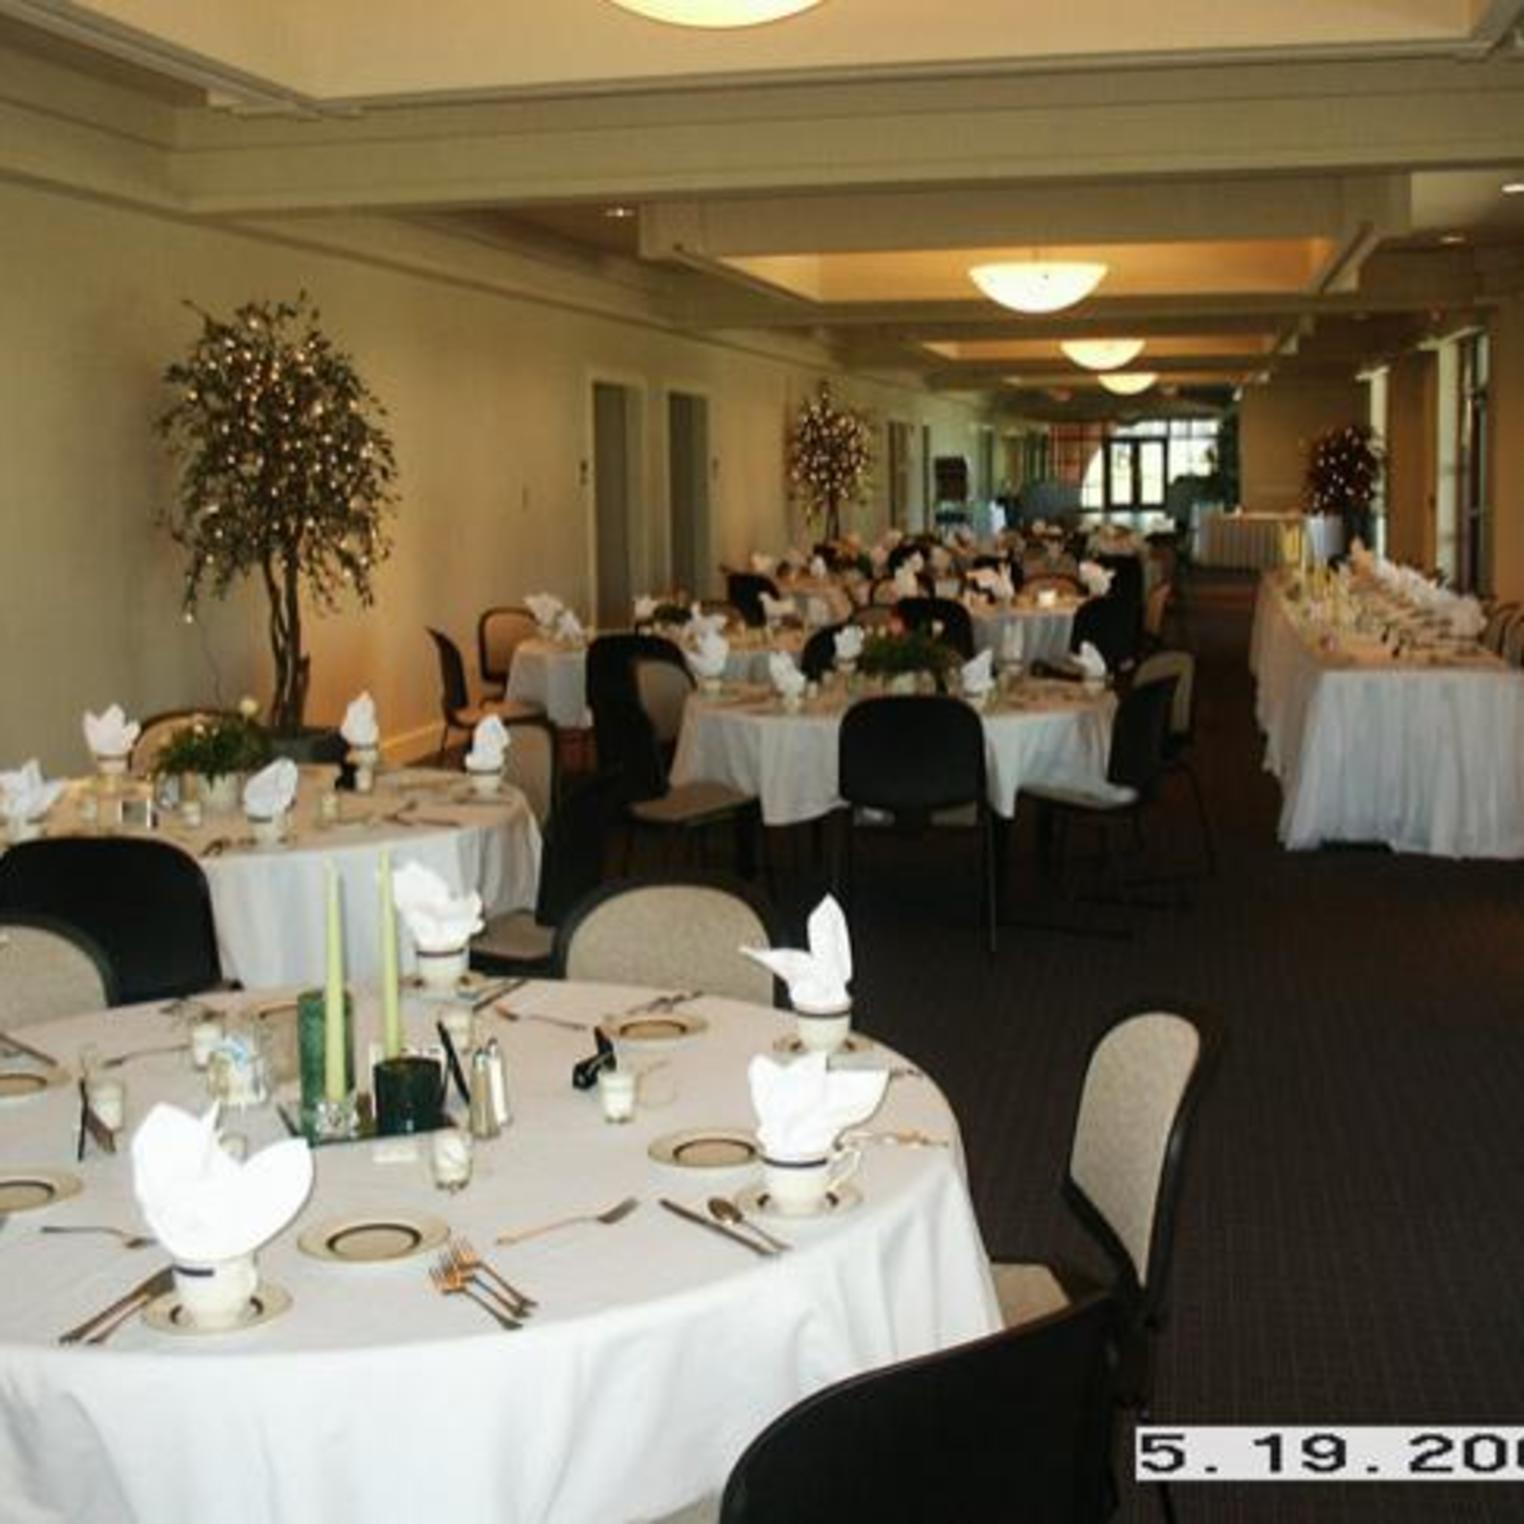 Banquet Set up at the Conference Center at Shippensburg University